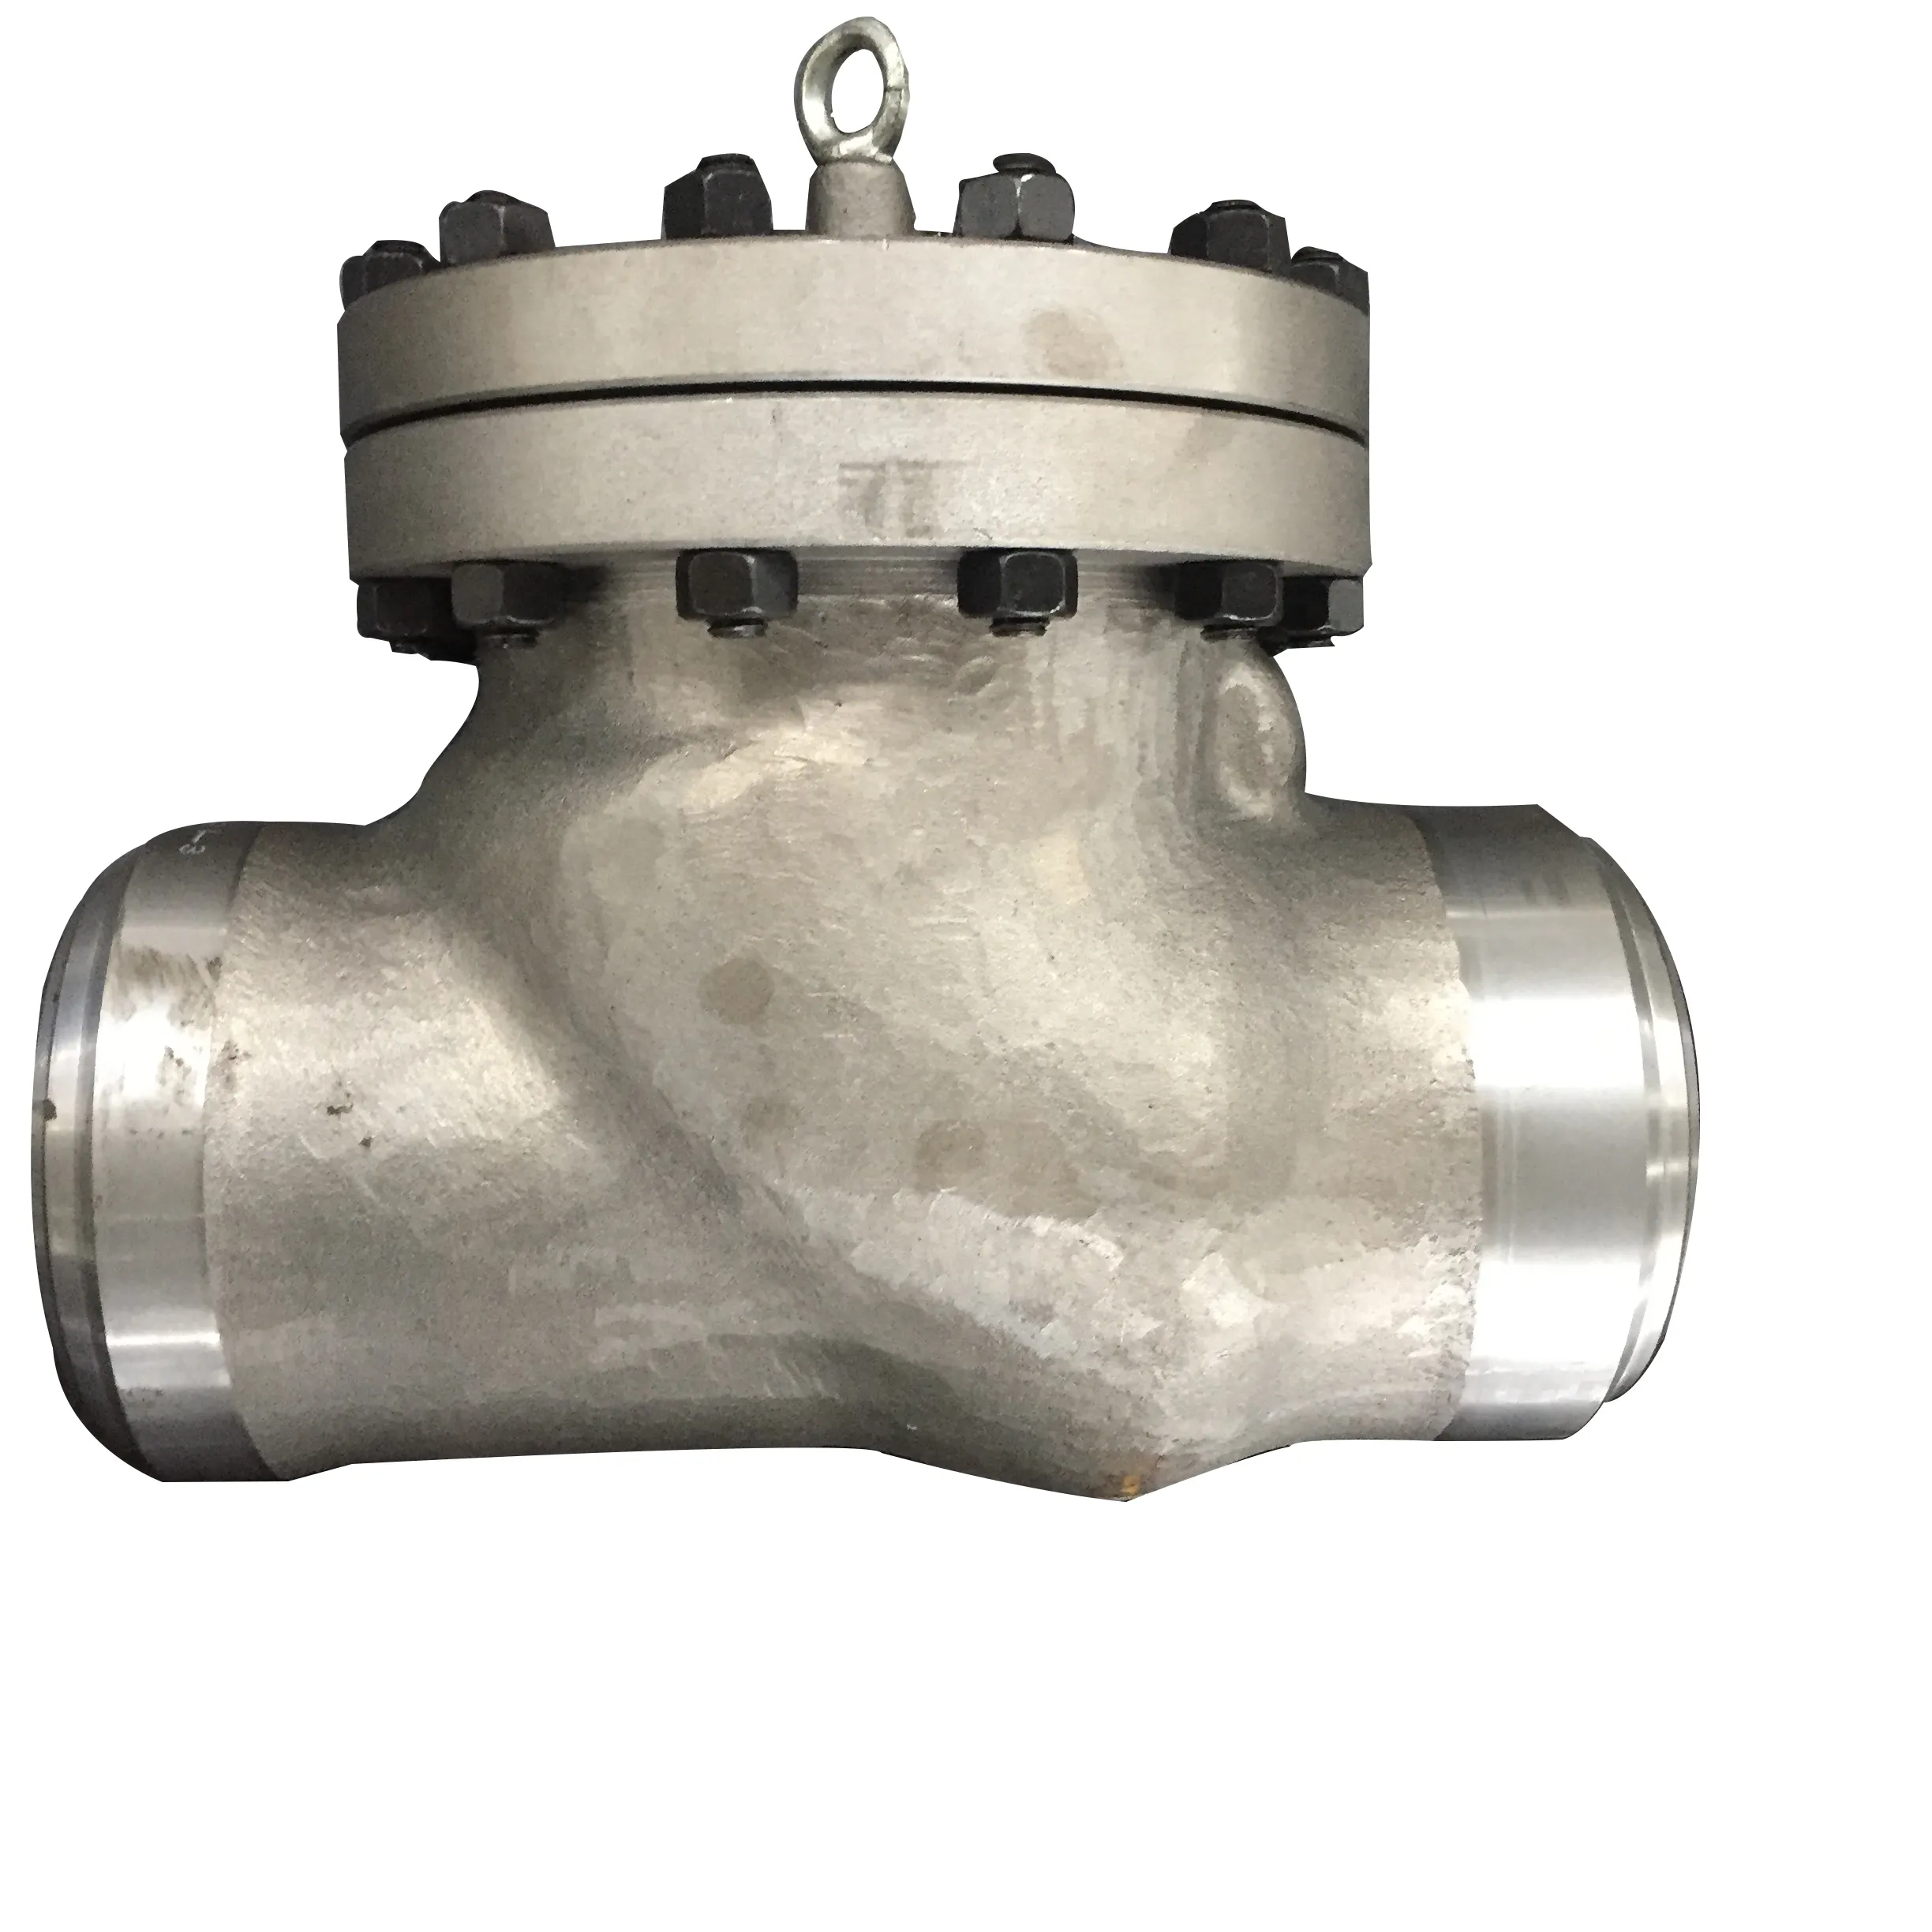 Manual non-slam duplex check valve 150mm